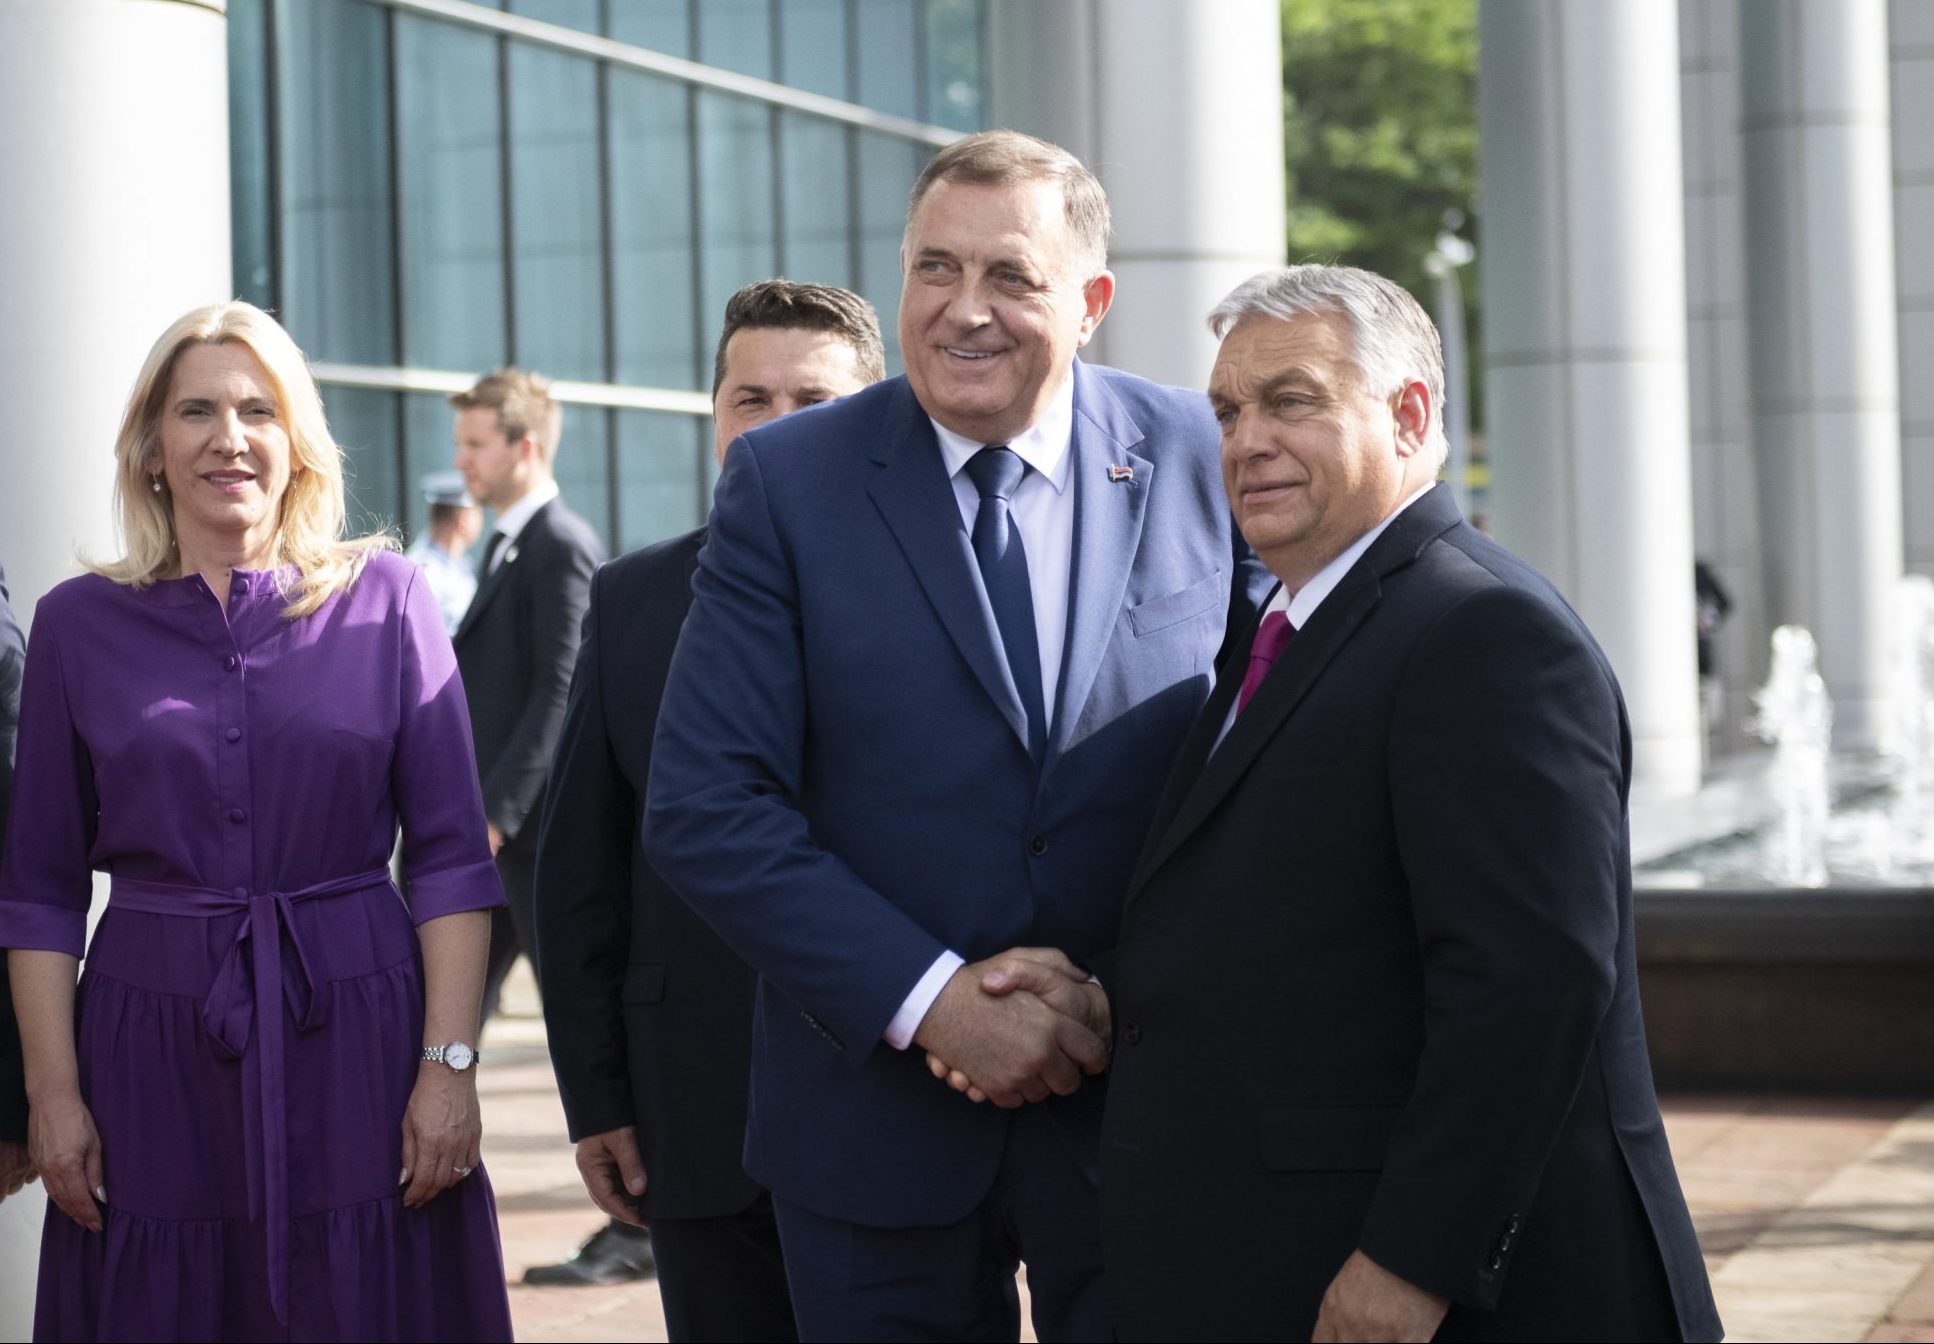 Europas Reserven liegen auf dem Balkan, sagt Viktor Orbán